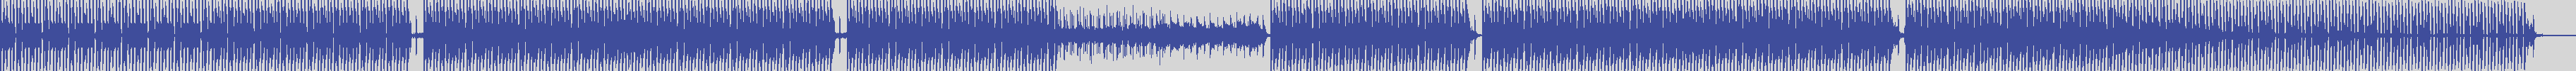 nf_boyz_records [NFY022] Jay S - Housetrain [80s Mix] audio wave form